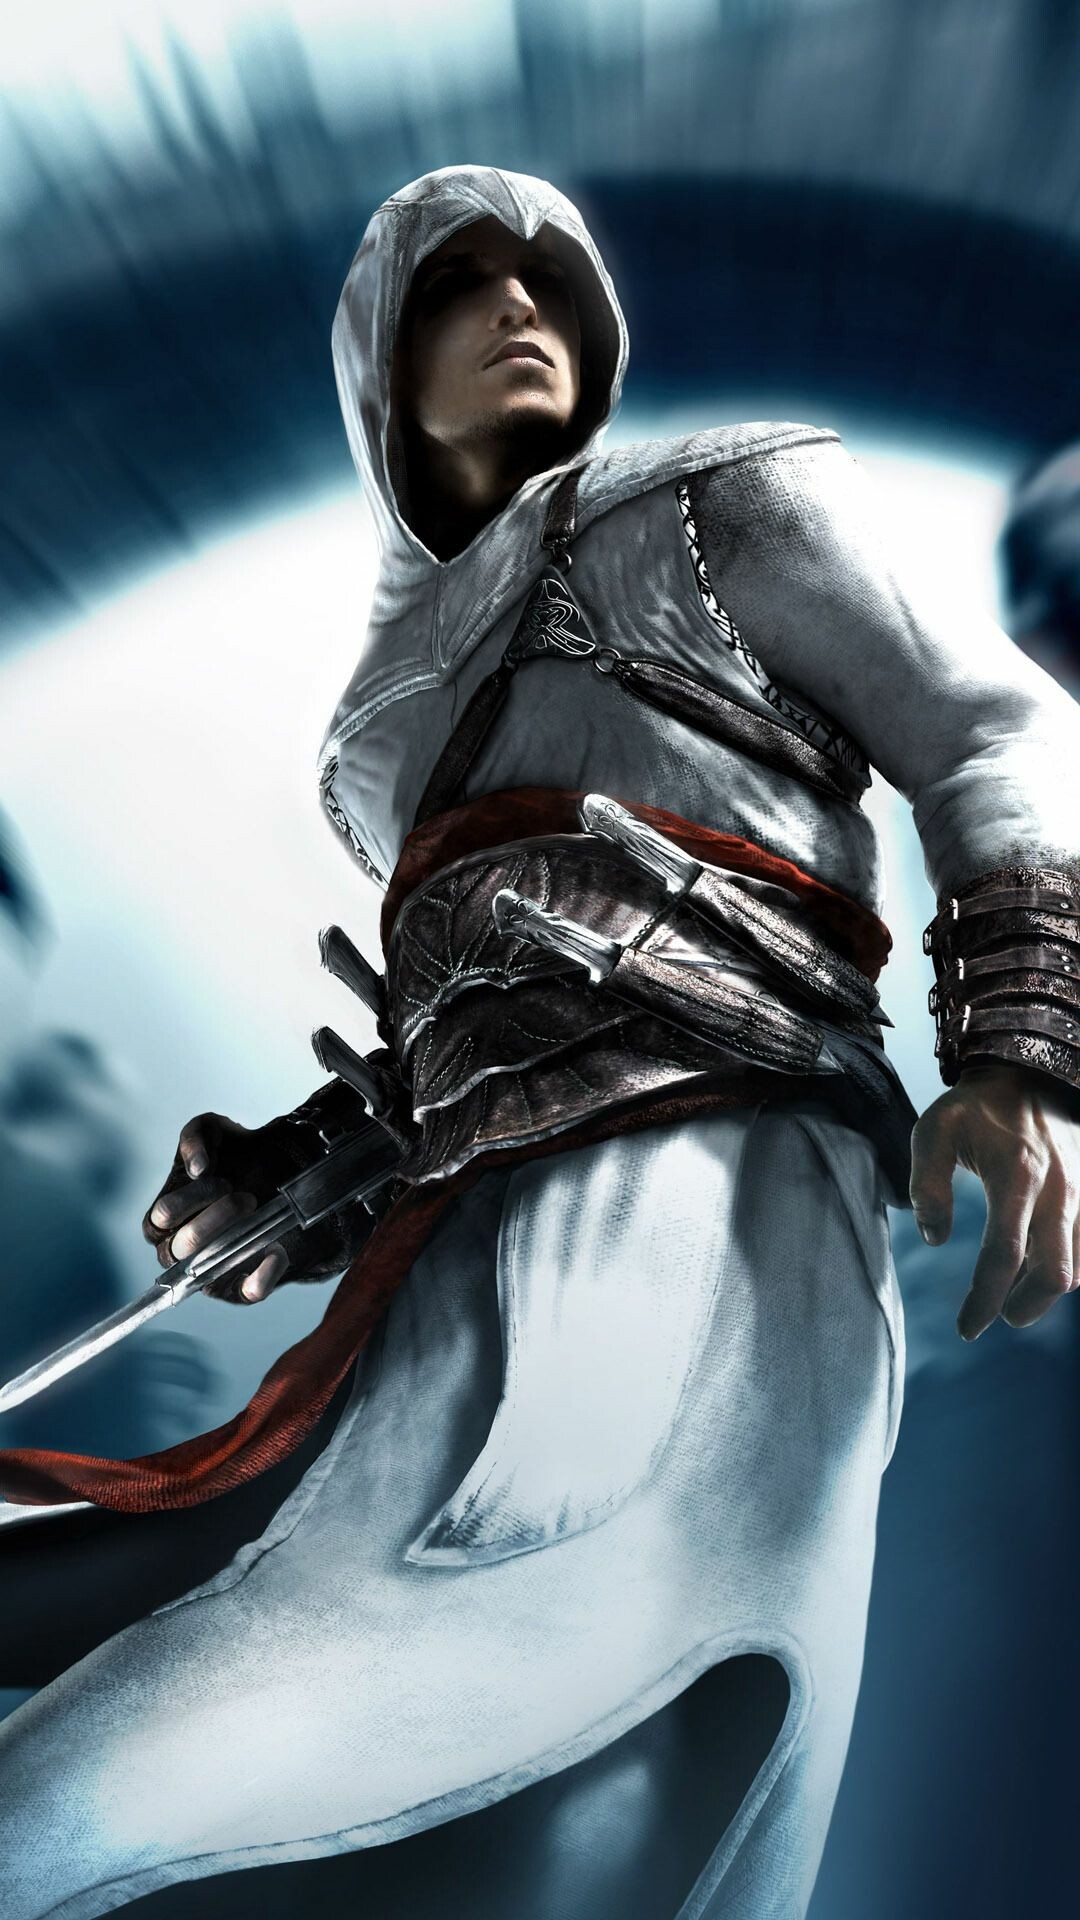 Assassin's Creed: Altair Ibn-La'Ahad, The Bird, Son of No One. 1080x1920 Full HD Wallpaper.